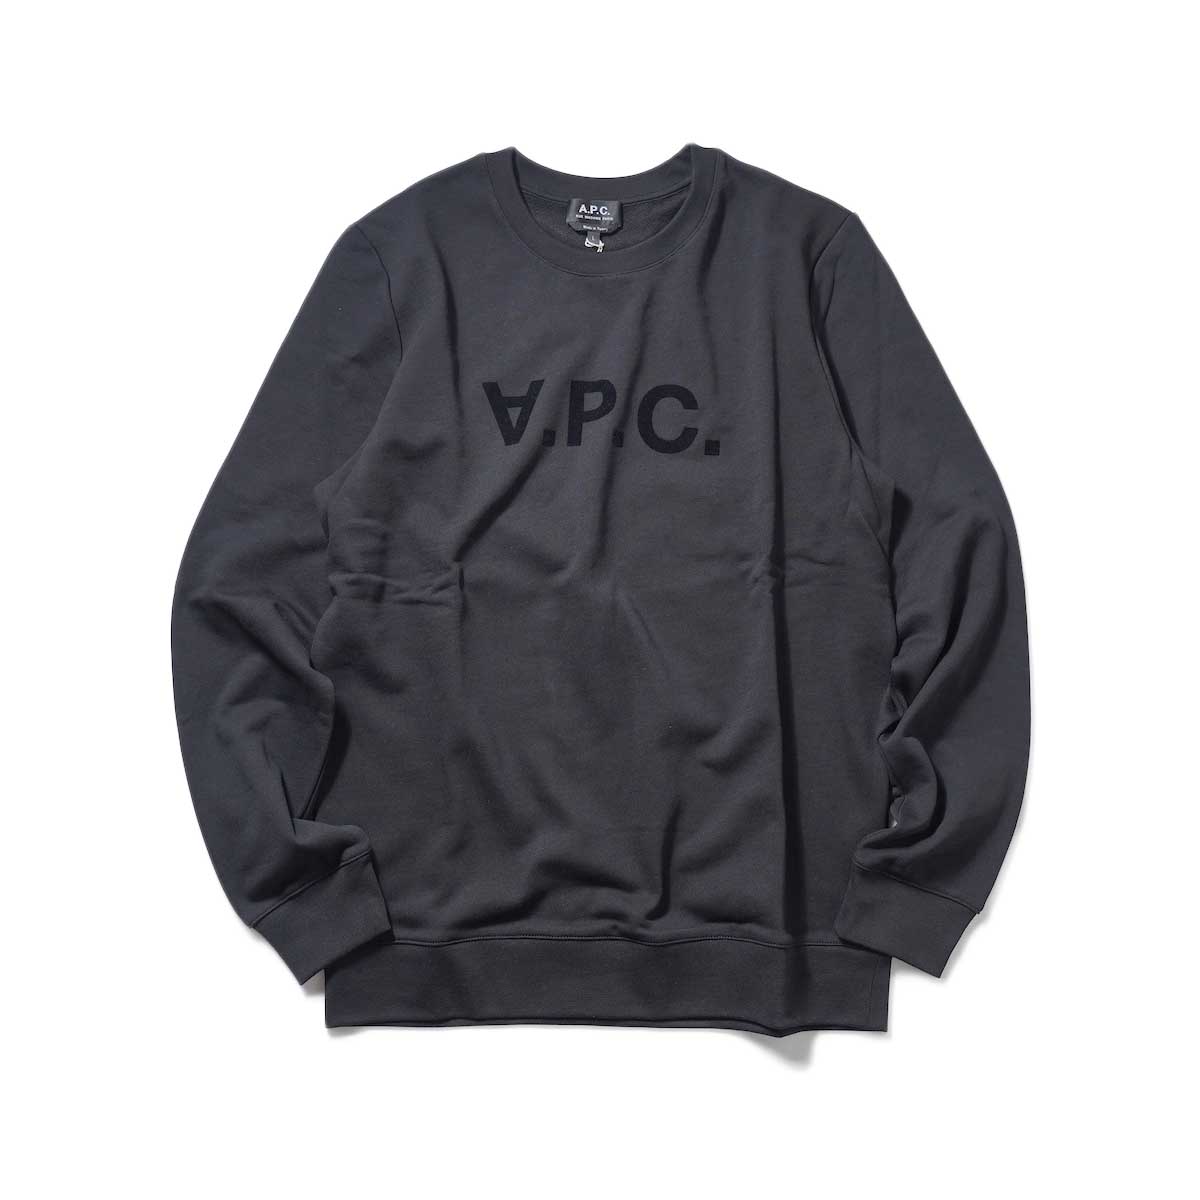 A.P.C. / VPC スウェットシャツ (Black)